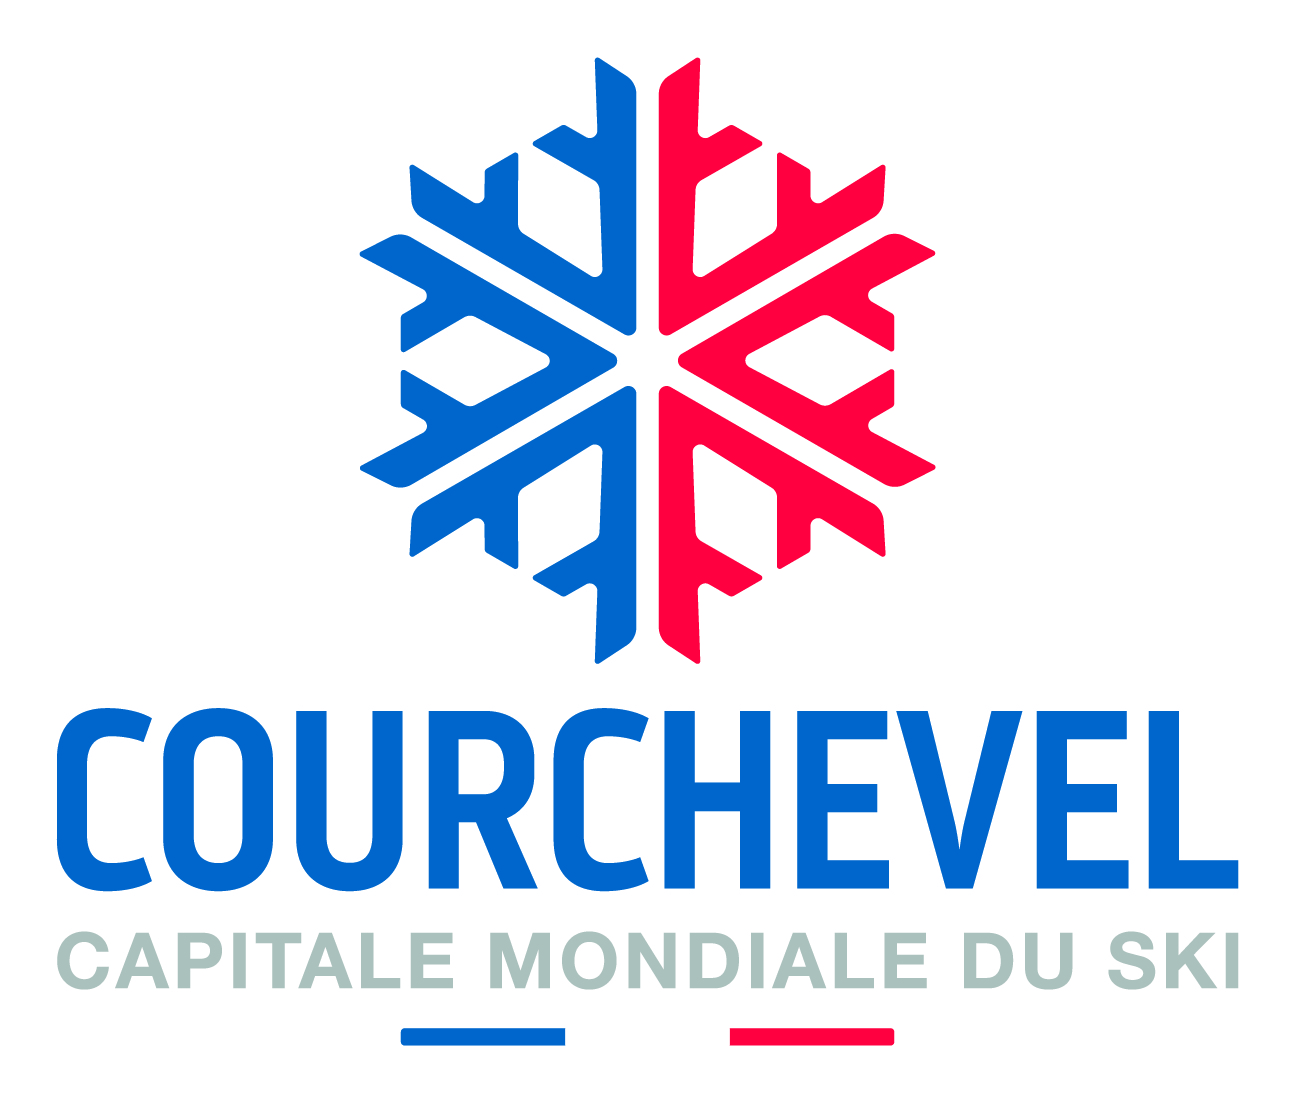 Ski resort Courchevel